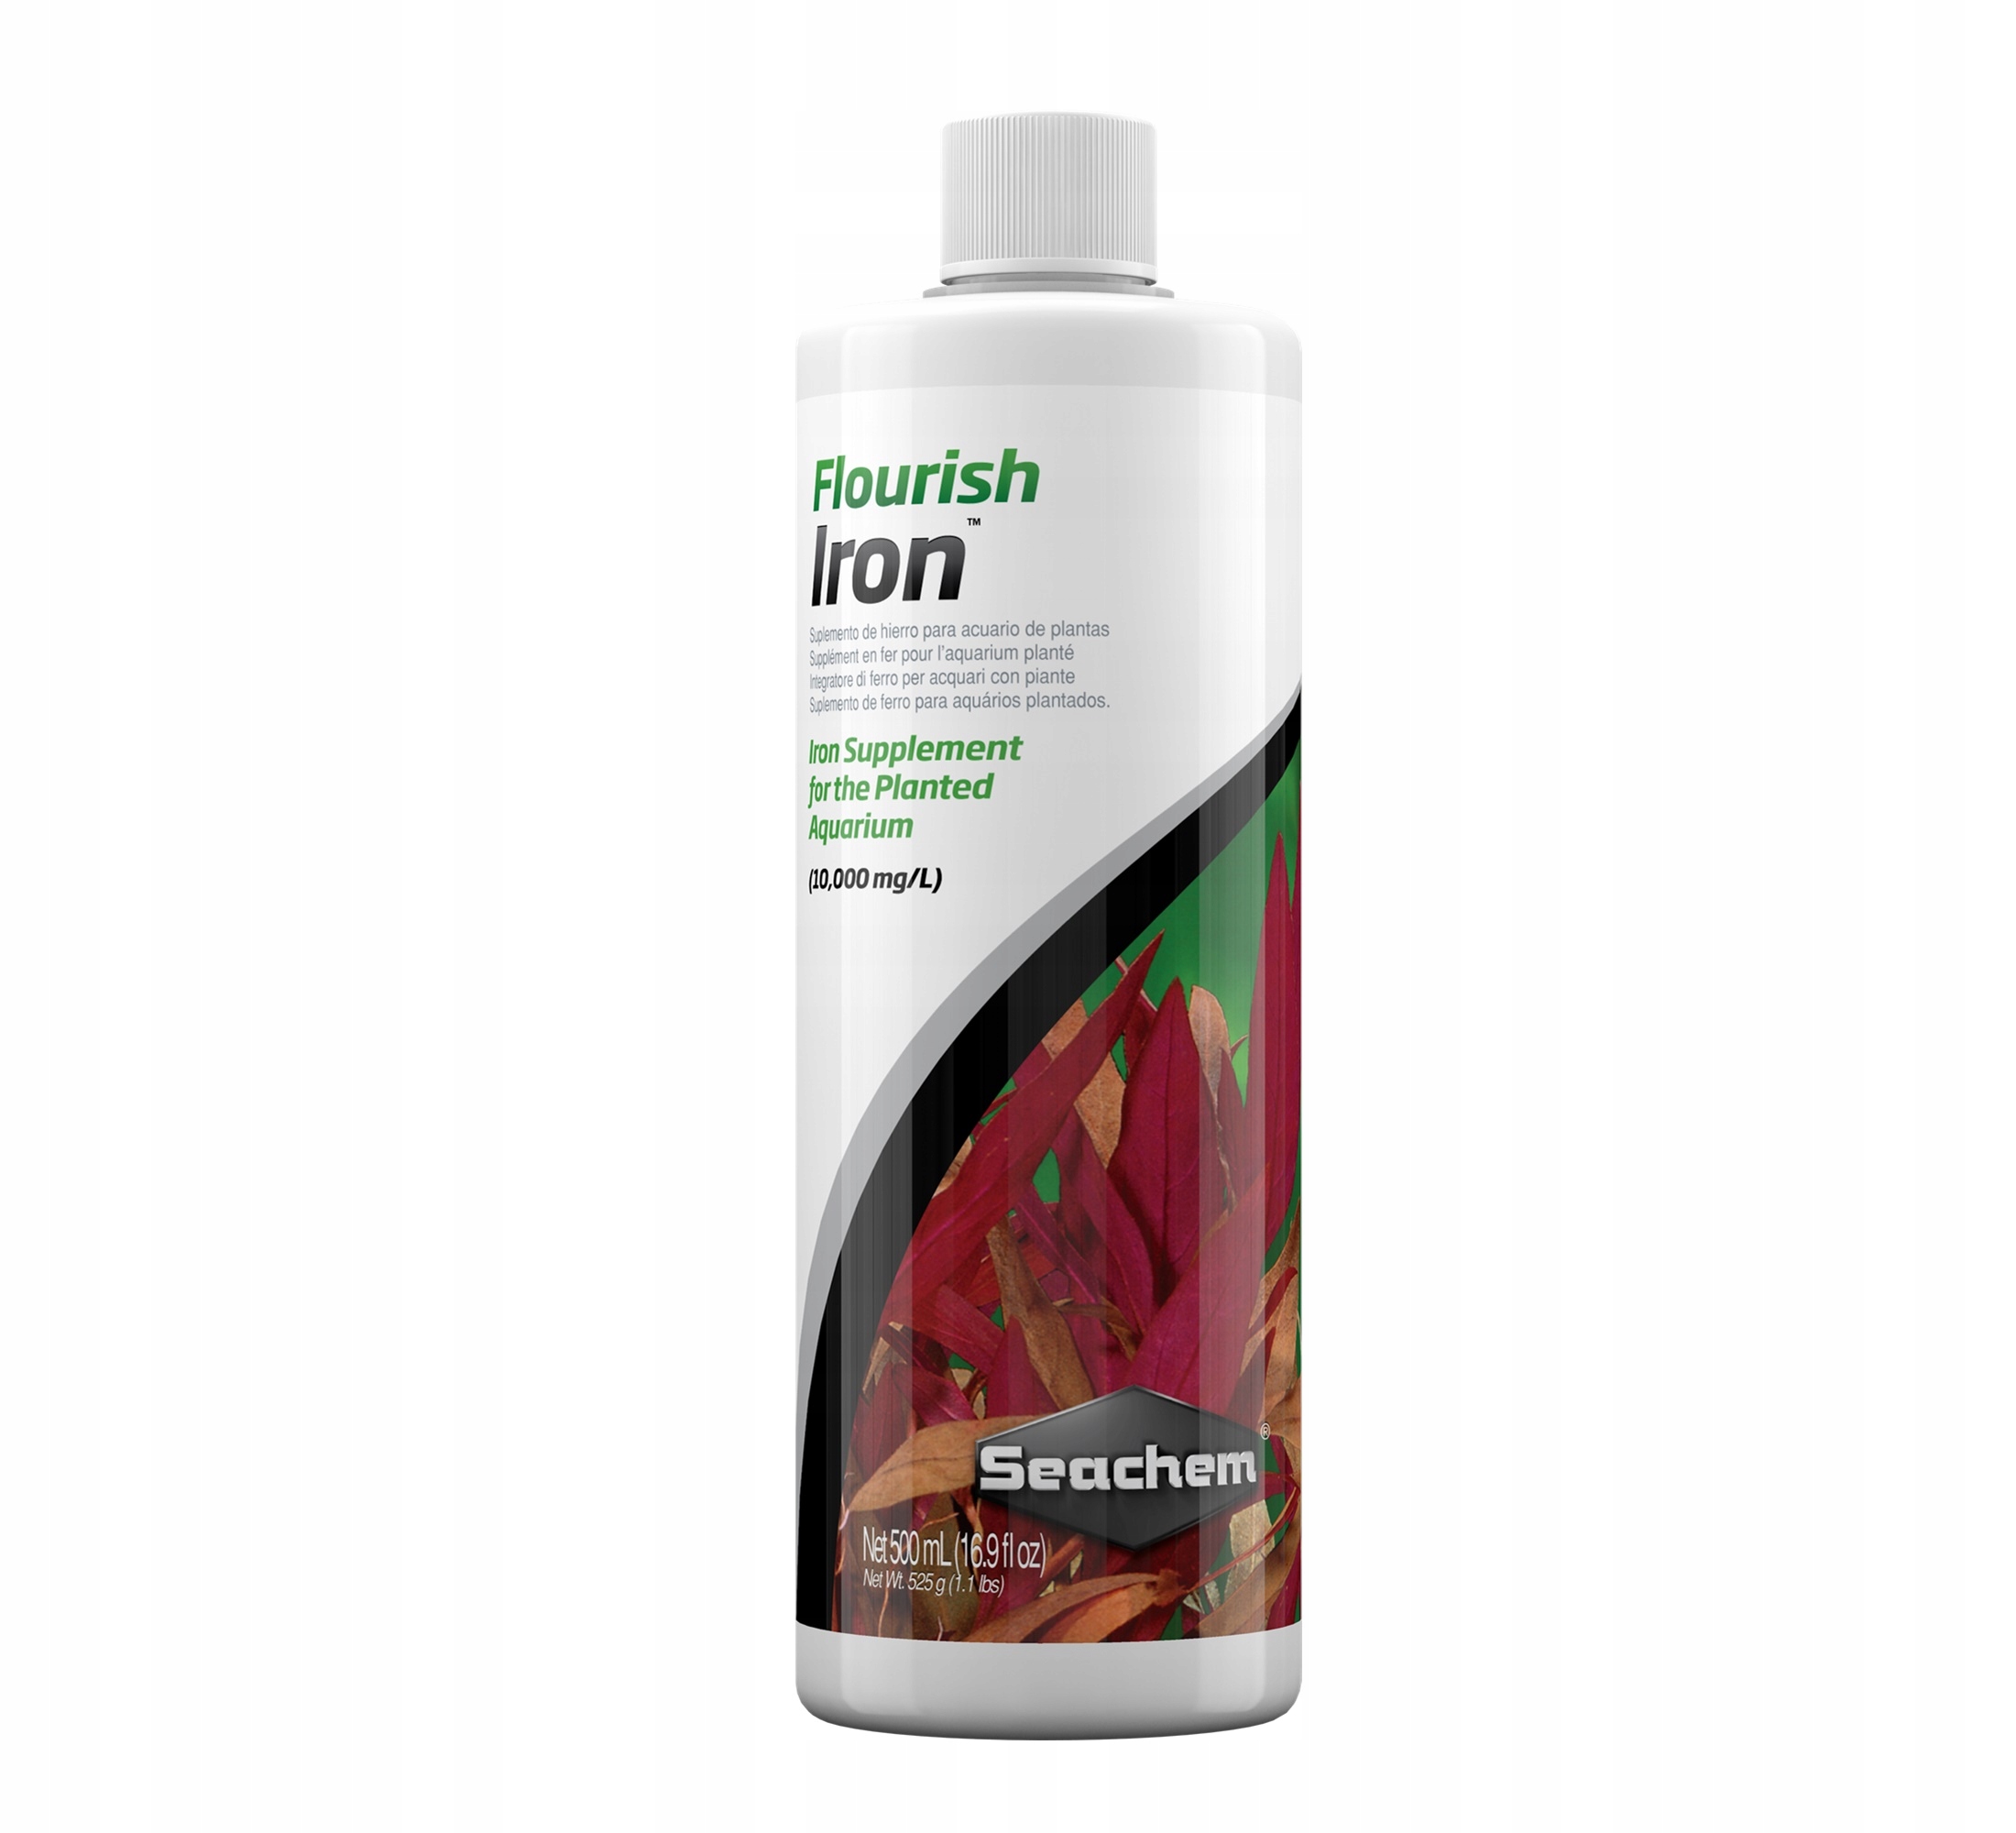 SEACHEM Flourish Iron 500ml Fe2 żelazo dla roślin 7088509802 - Allegro.pl